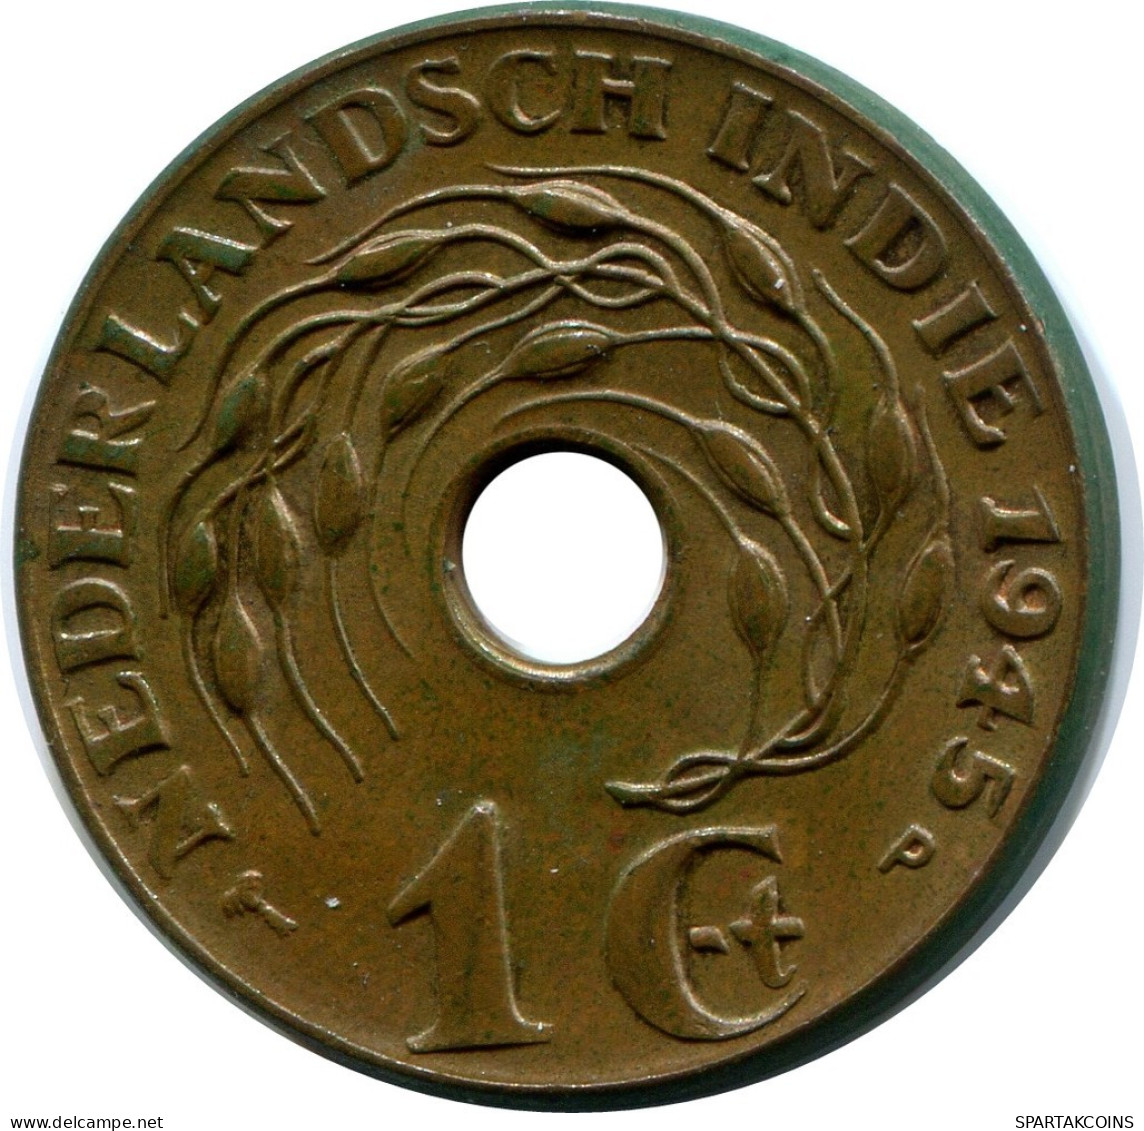 1 CENT 1945 NIEDERLANDE OSTINDIEN Münze #AZ113.D.A - Dutch East Indies